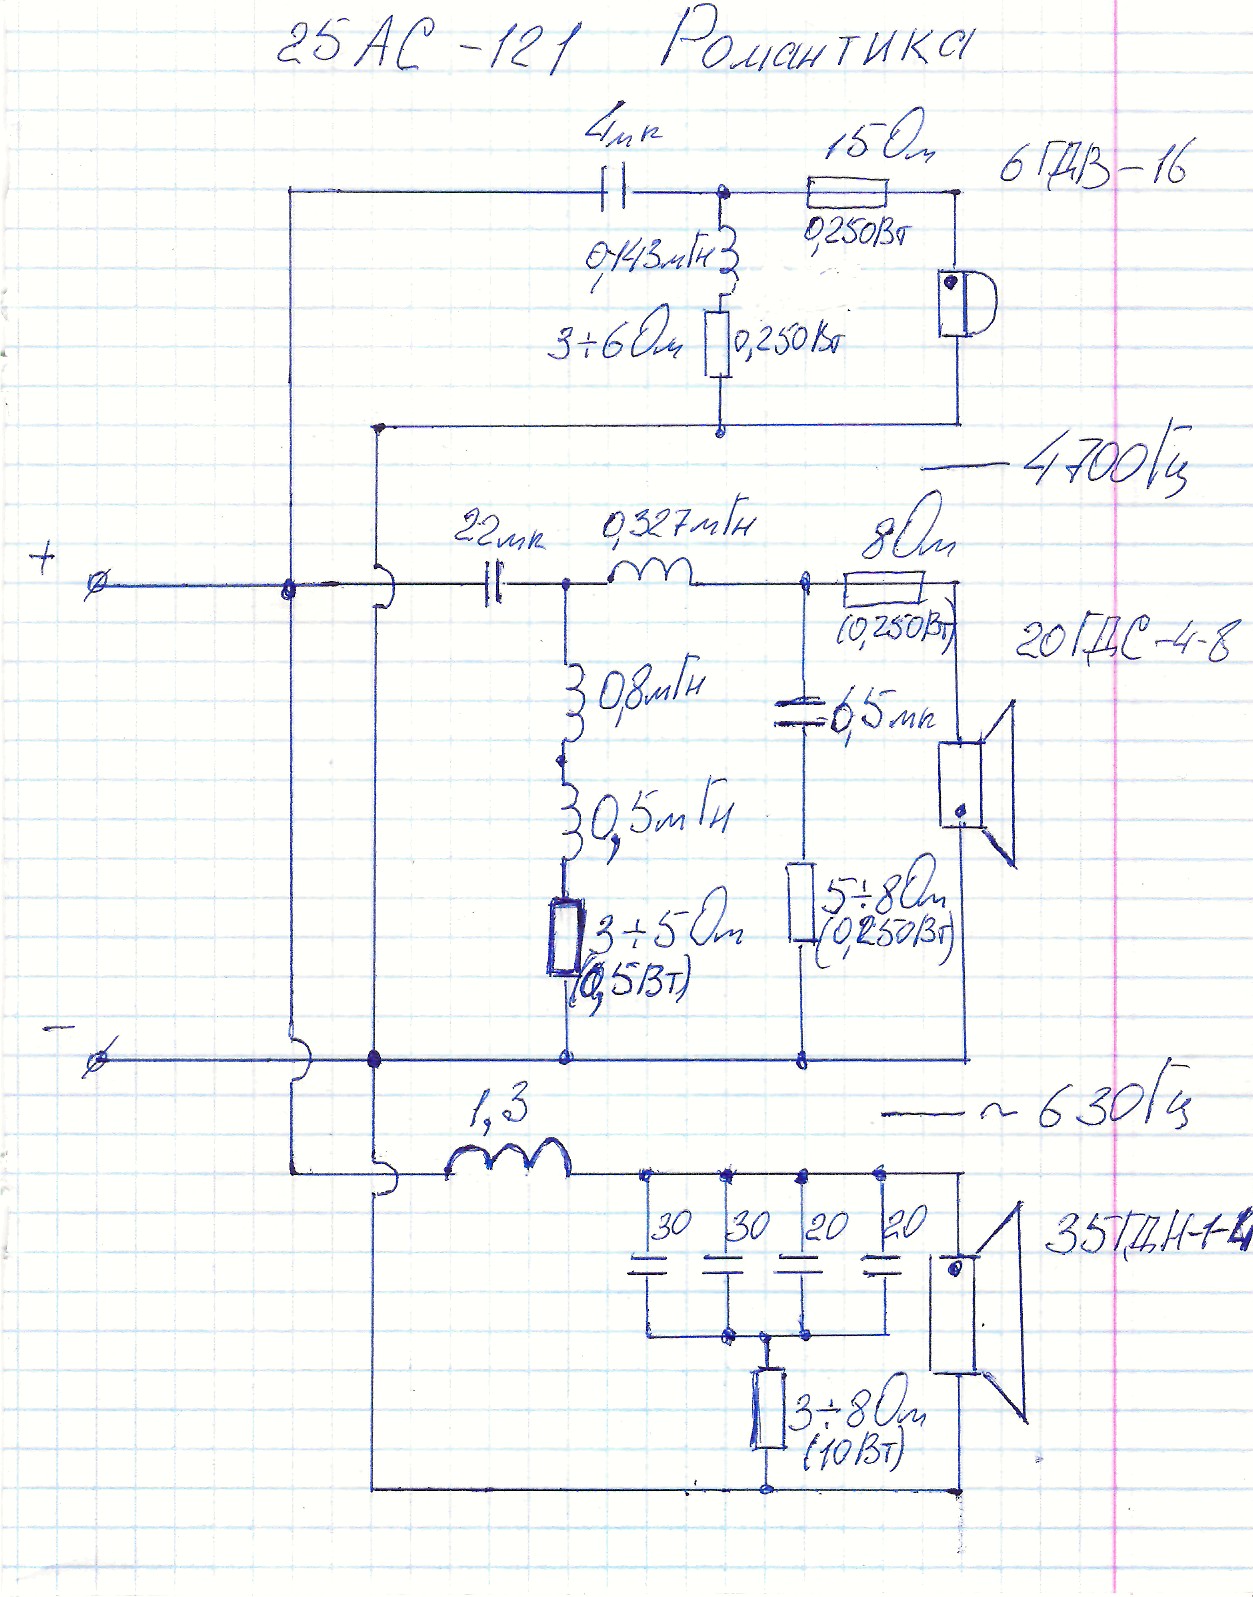 Схема колонки электроника 25 ас